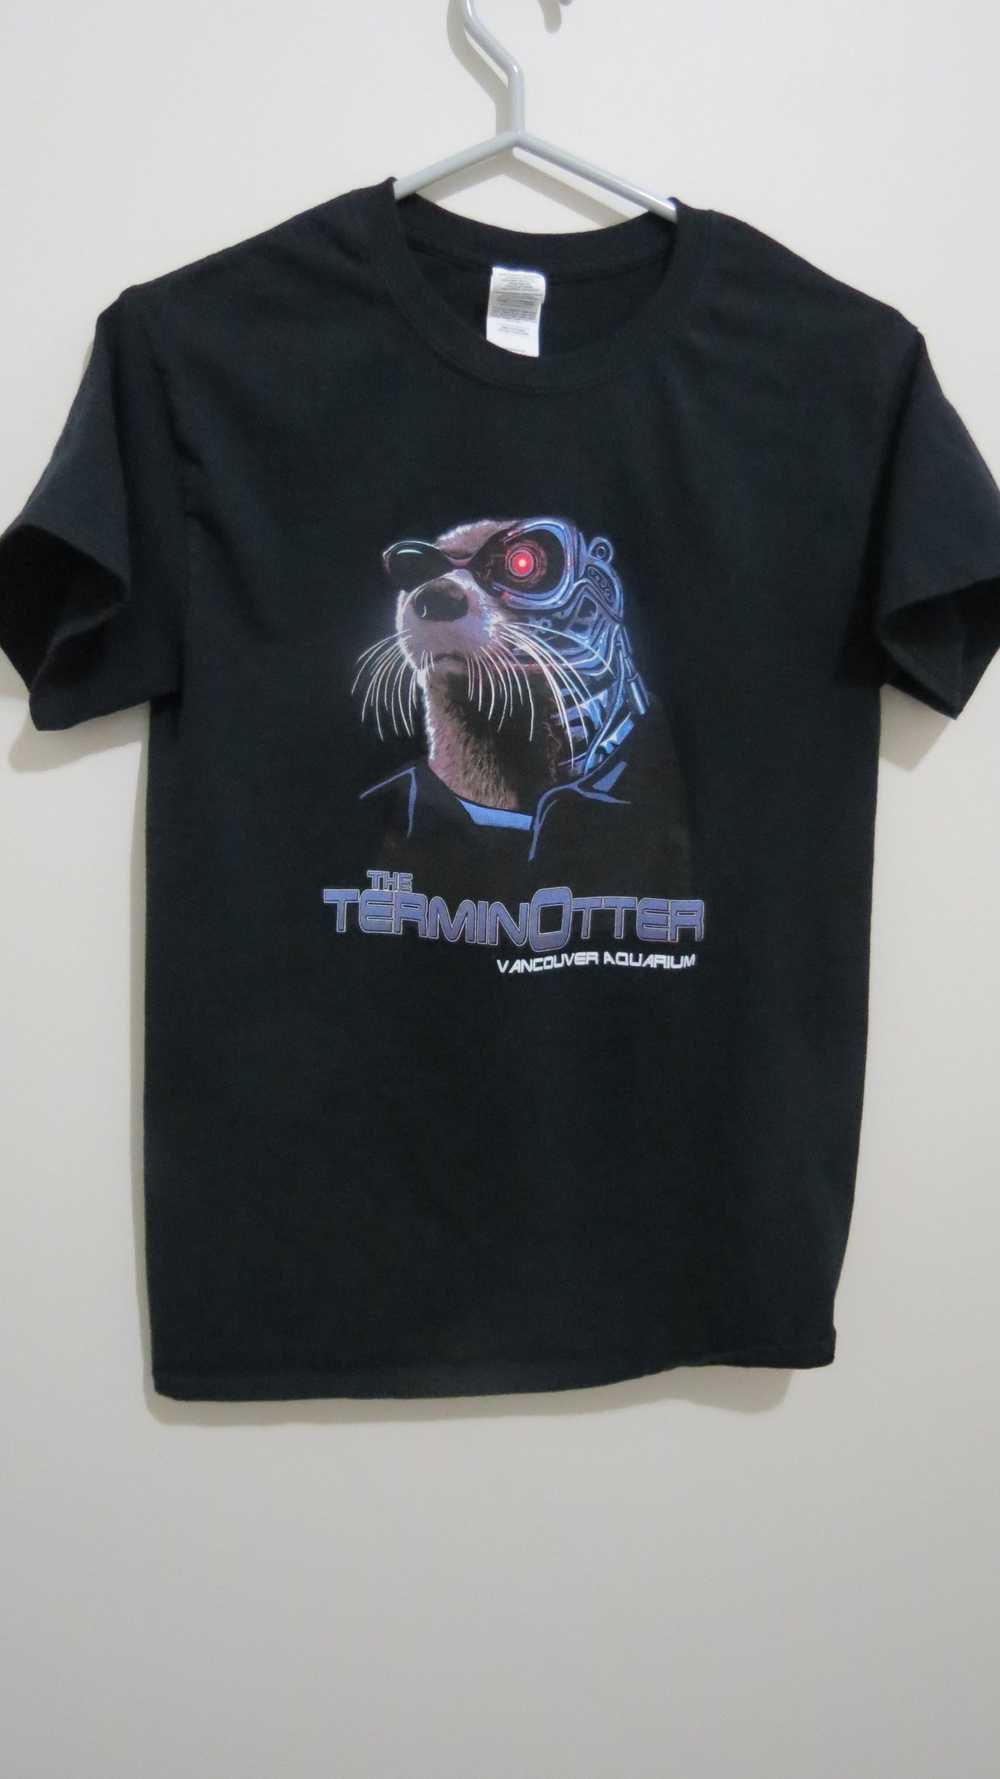 Tee The Terminotter Vancouver Aquarium Tshirt S T… - image 1